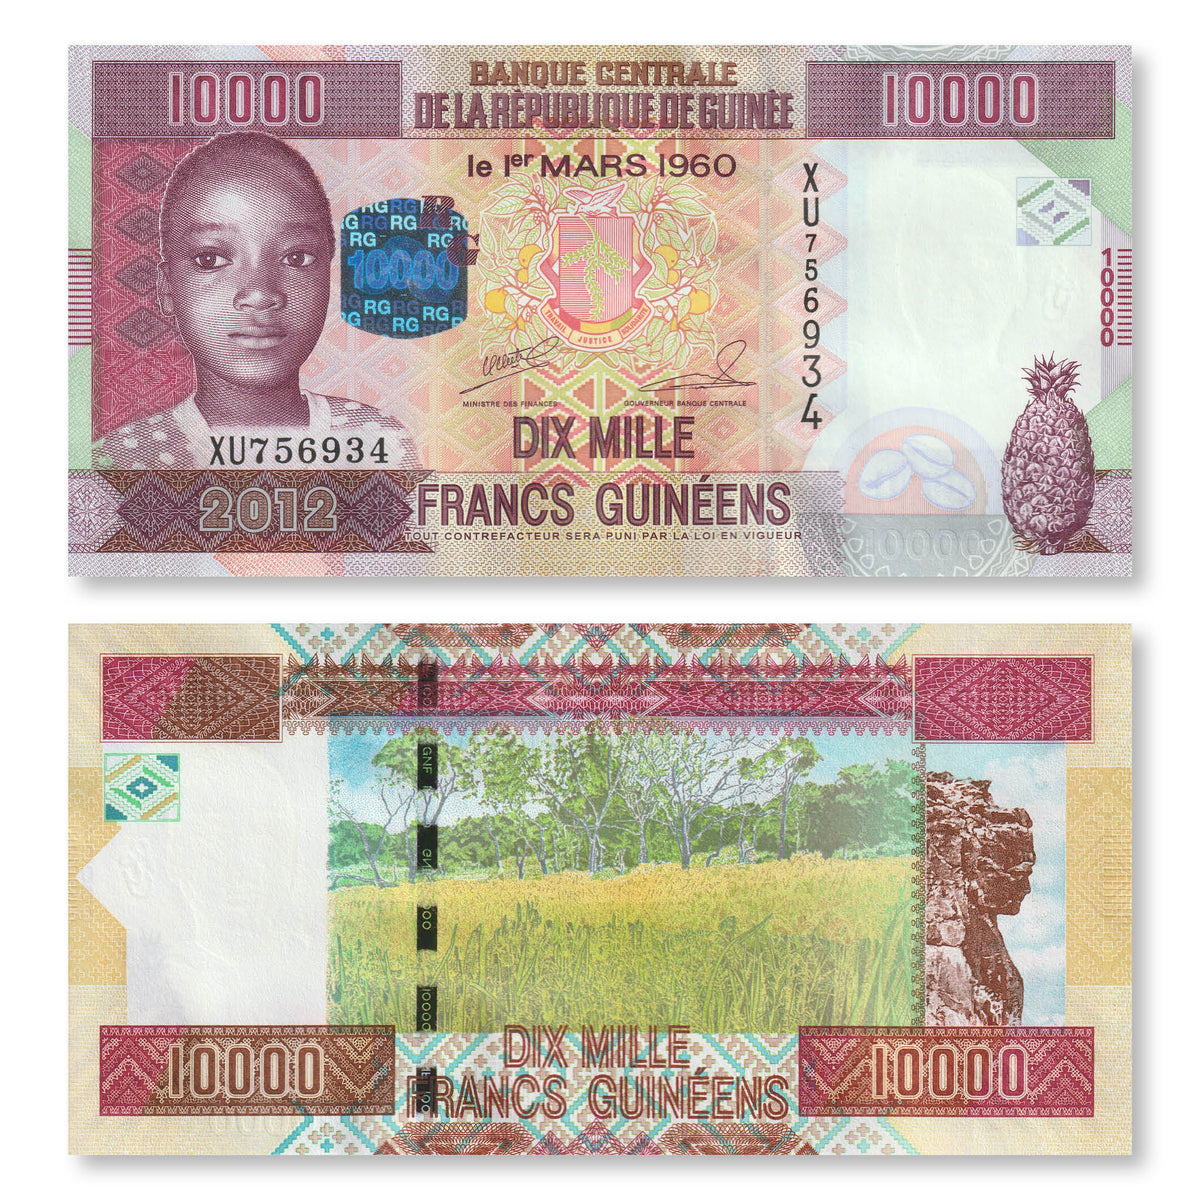 Guinea 10000 Francs, 2012, B336a, P46, UNC - Robert's World Money - World Banknotes